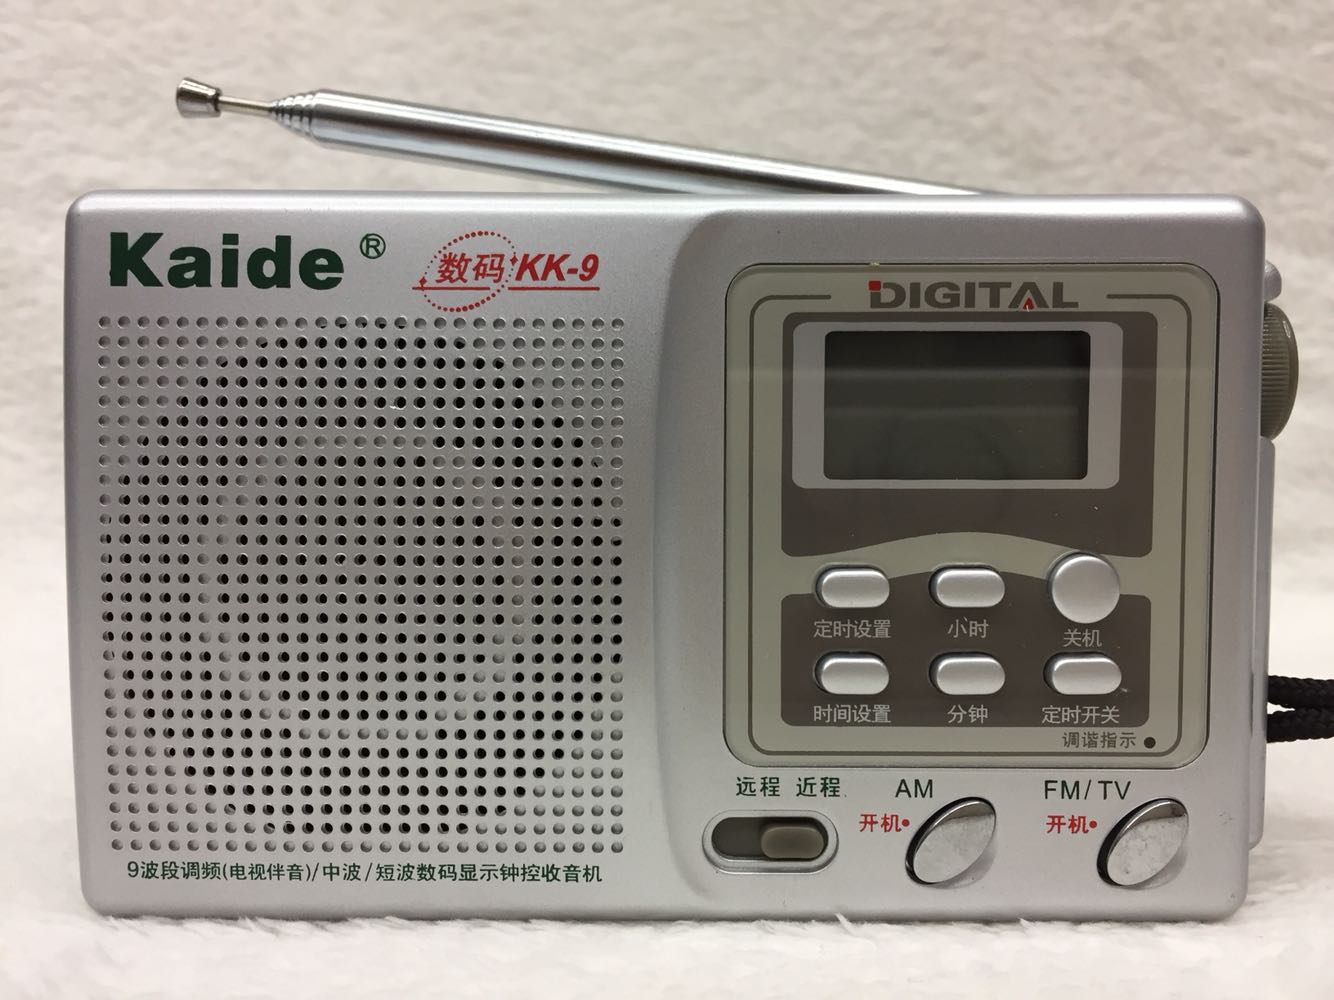 Kaide/Caidi Digital 9 Digital Display Radio Portable English C4 Test Campus Radio